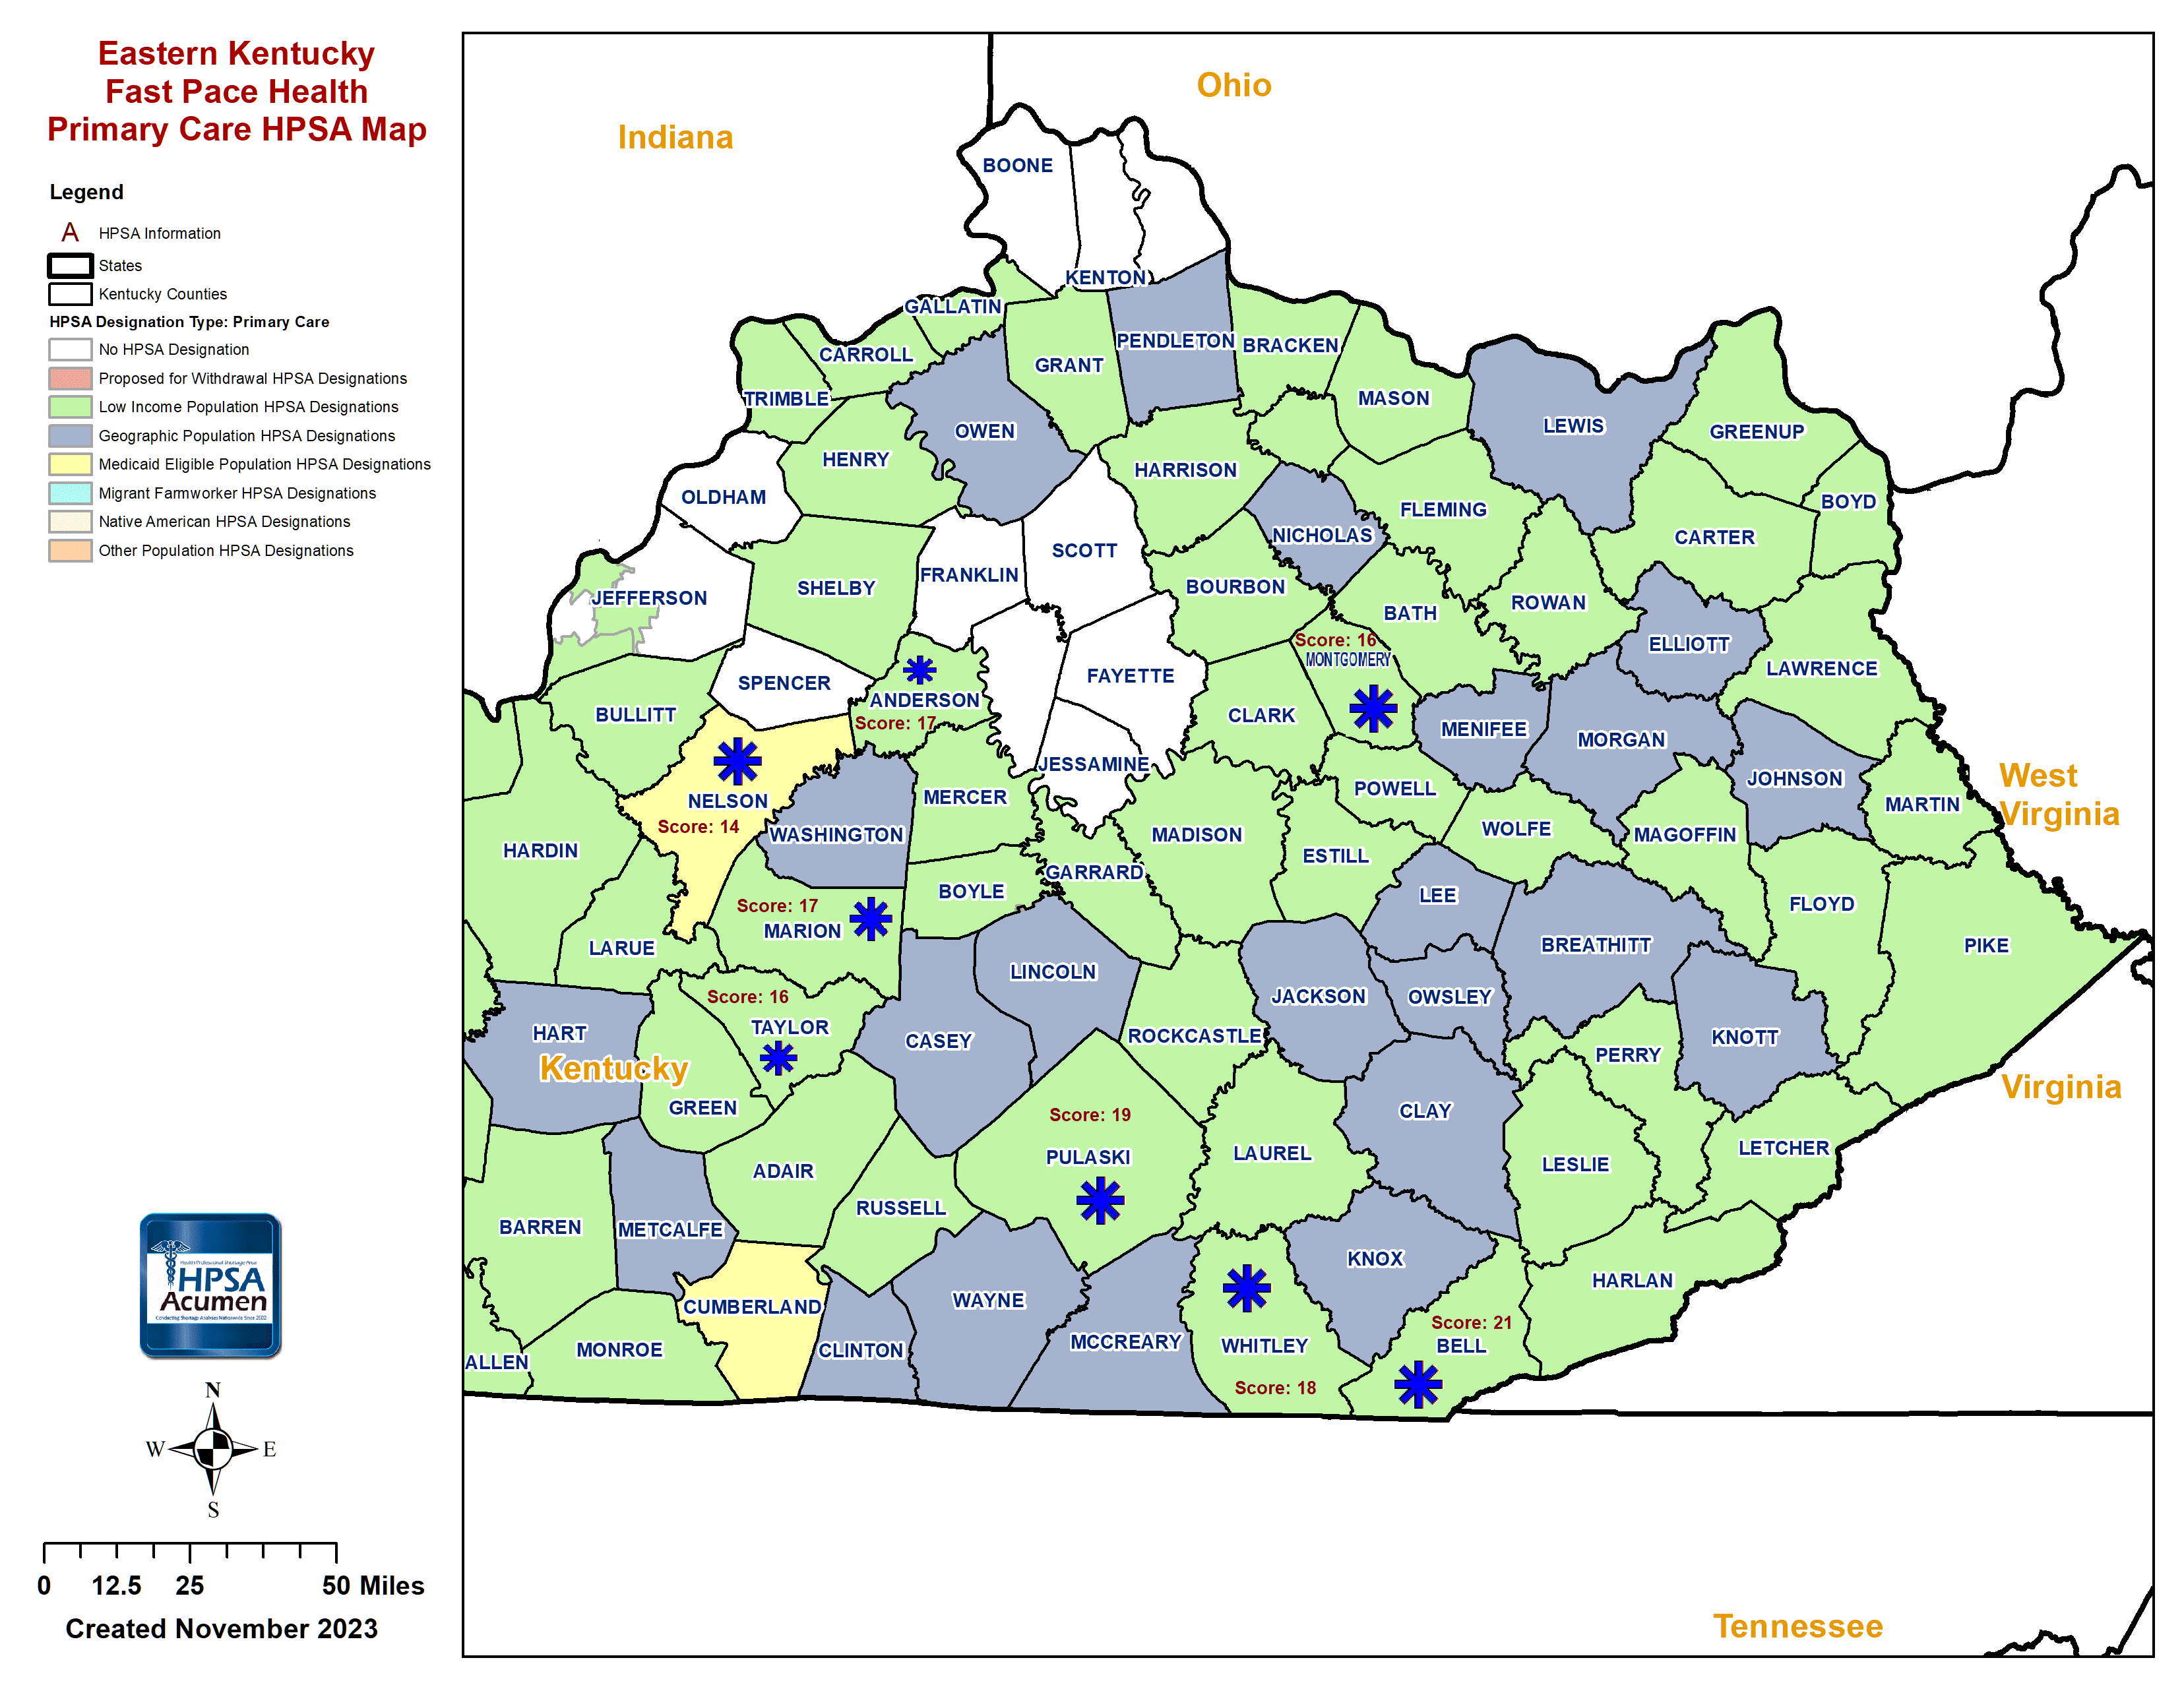 Fast Pace Health Eastern Kentucky PC HPSA Map